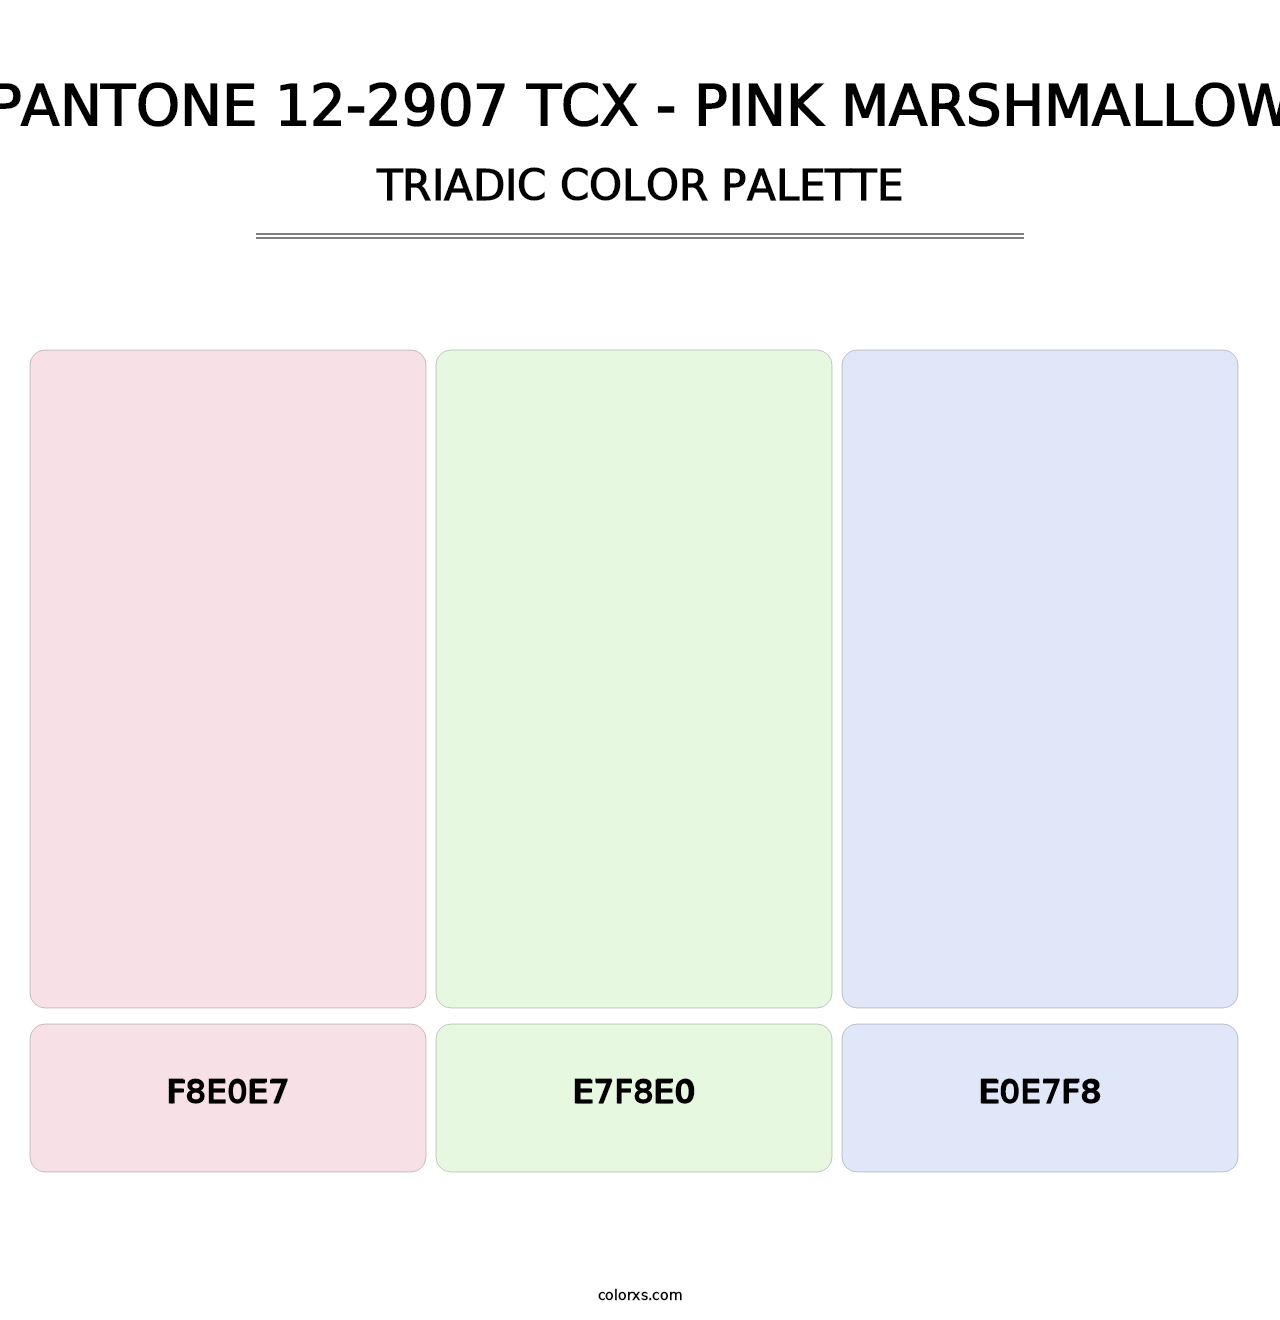 PANTONE 12-2907 TCX - Pink Marshmallow - Triadic Color Palette